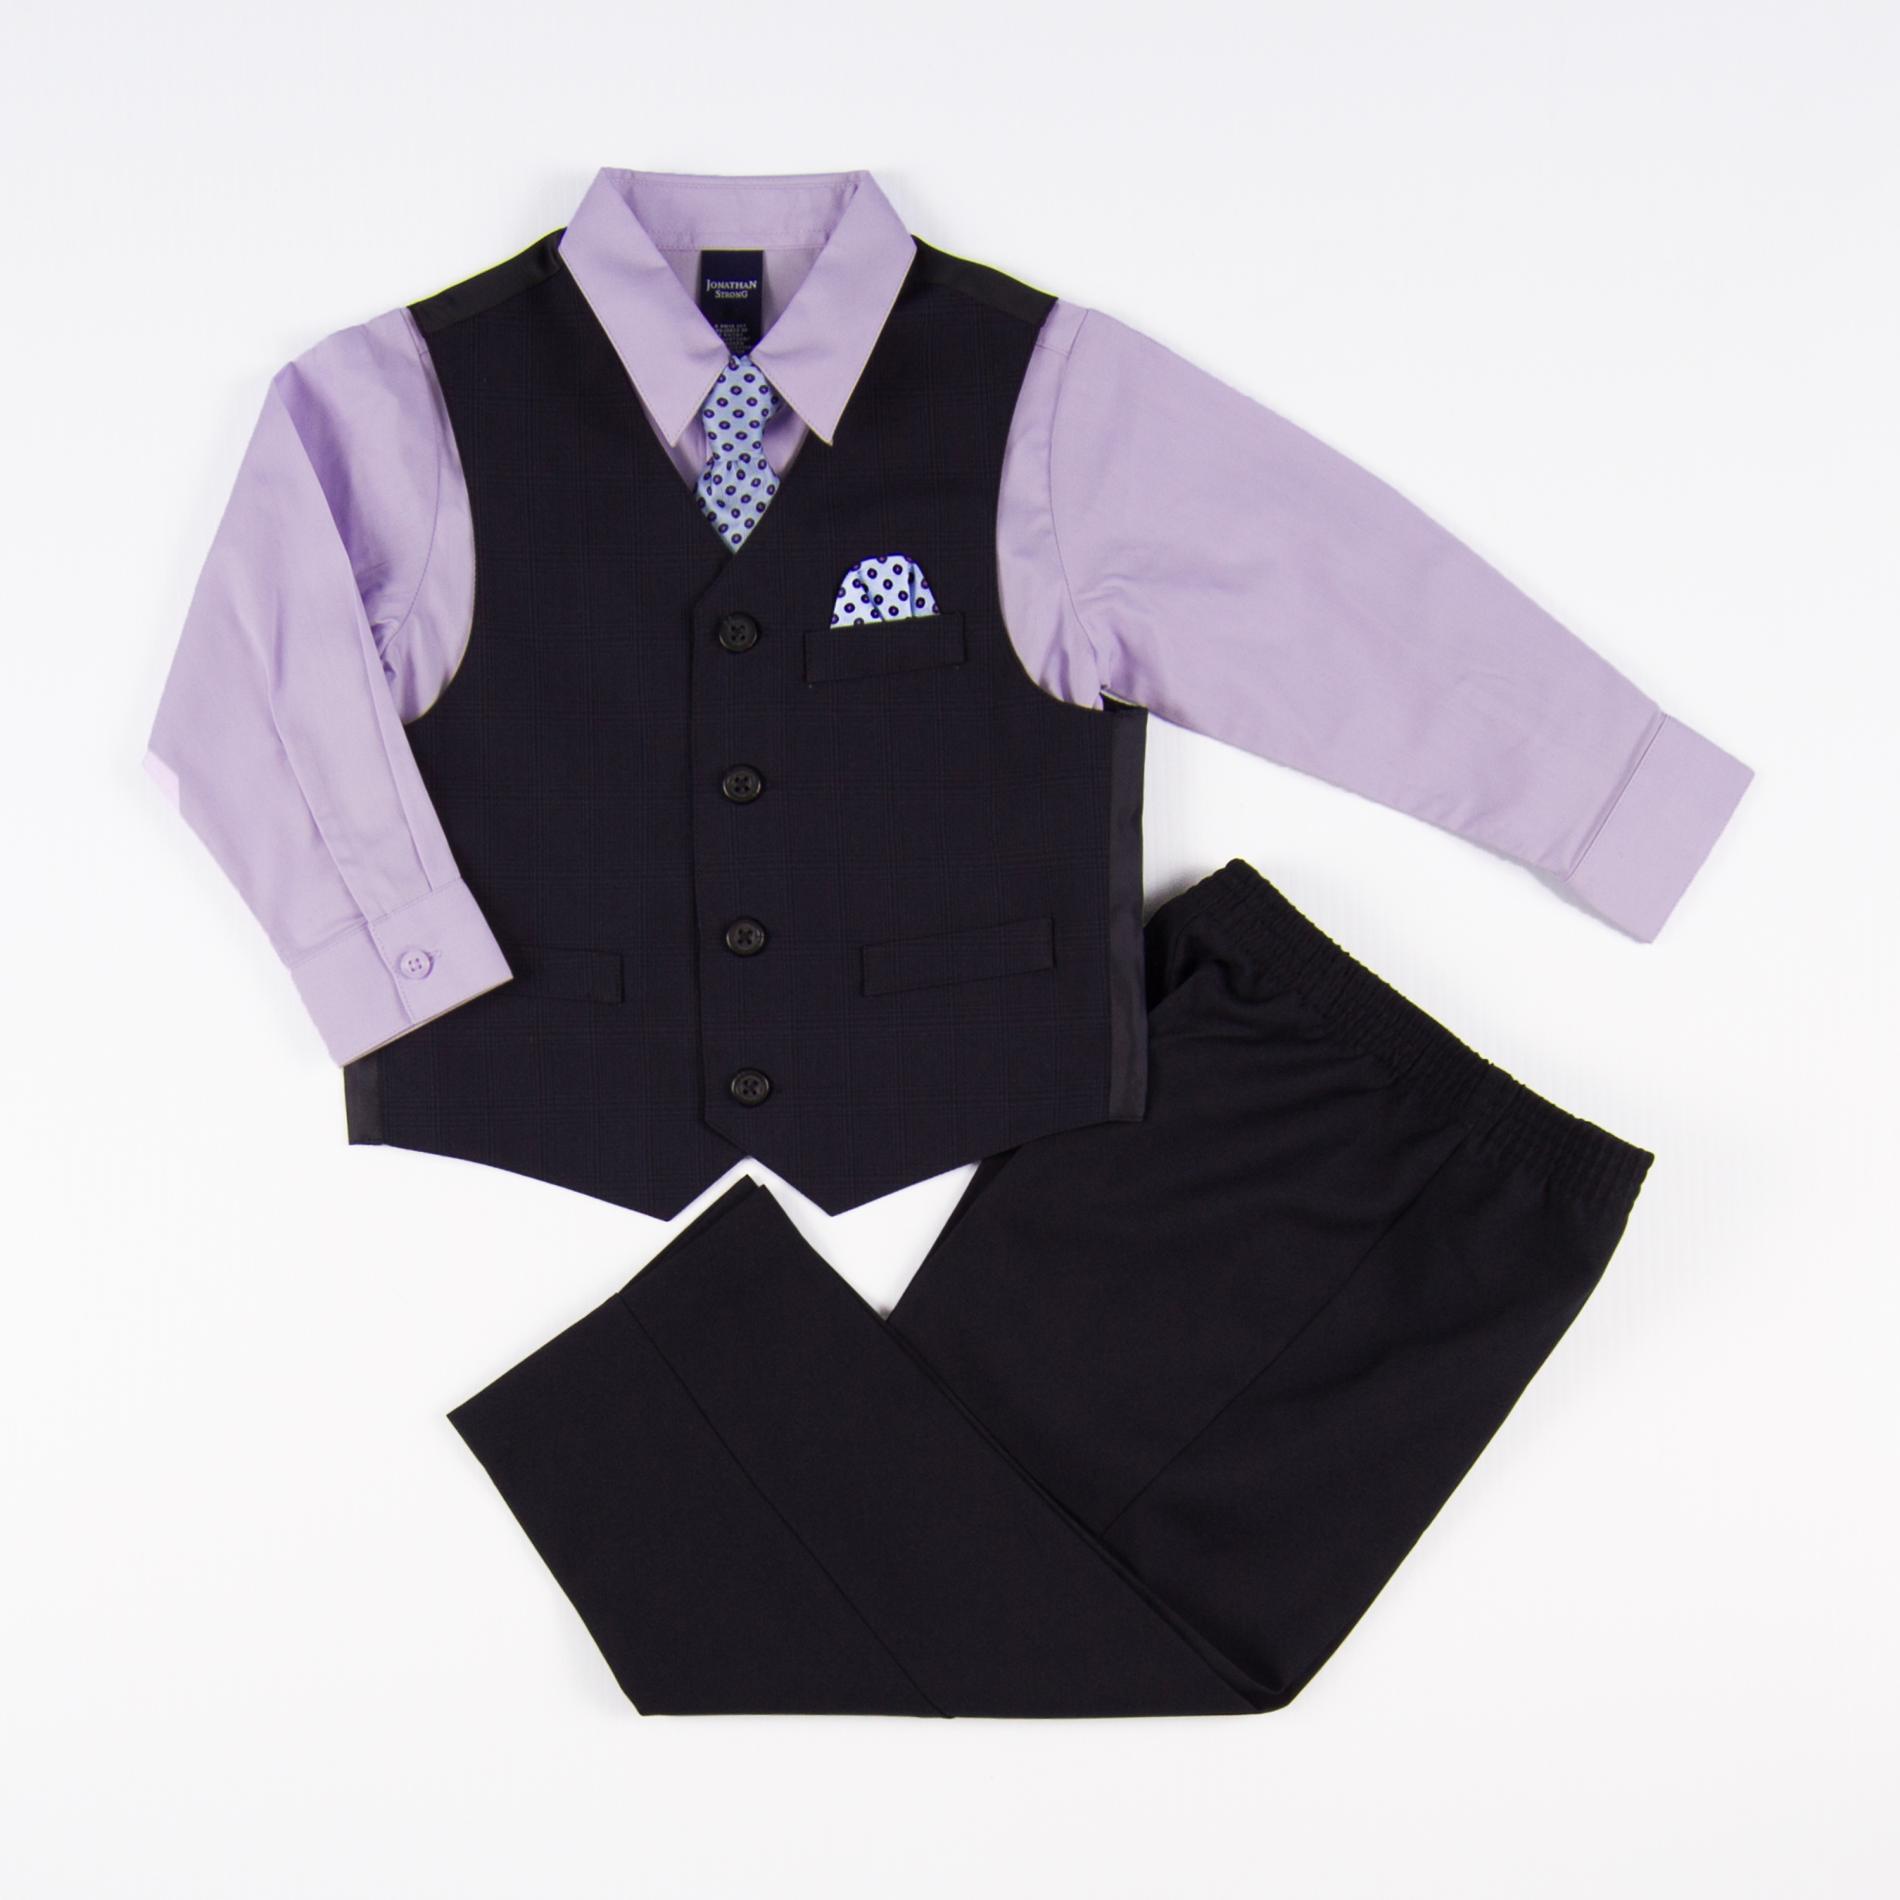 Jonathan Strong Infant & Toddler Boy's Shirt  Vest  Tie & Pants- Pocket Square